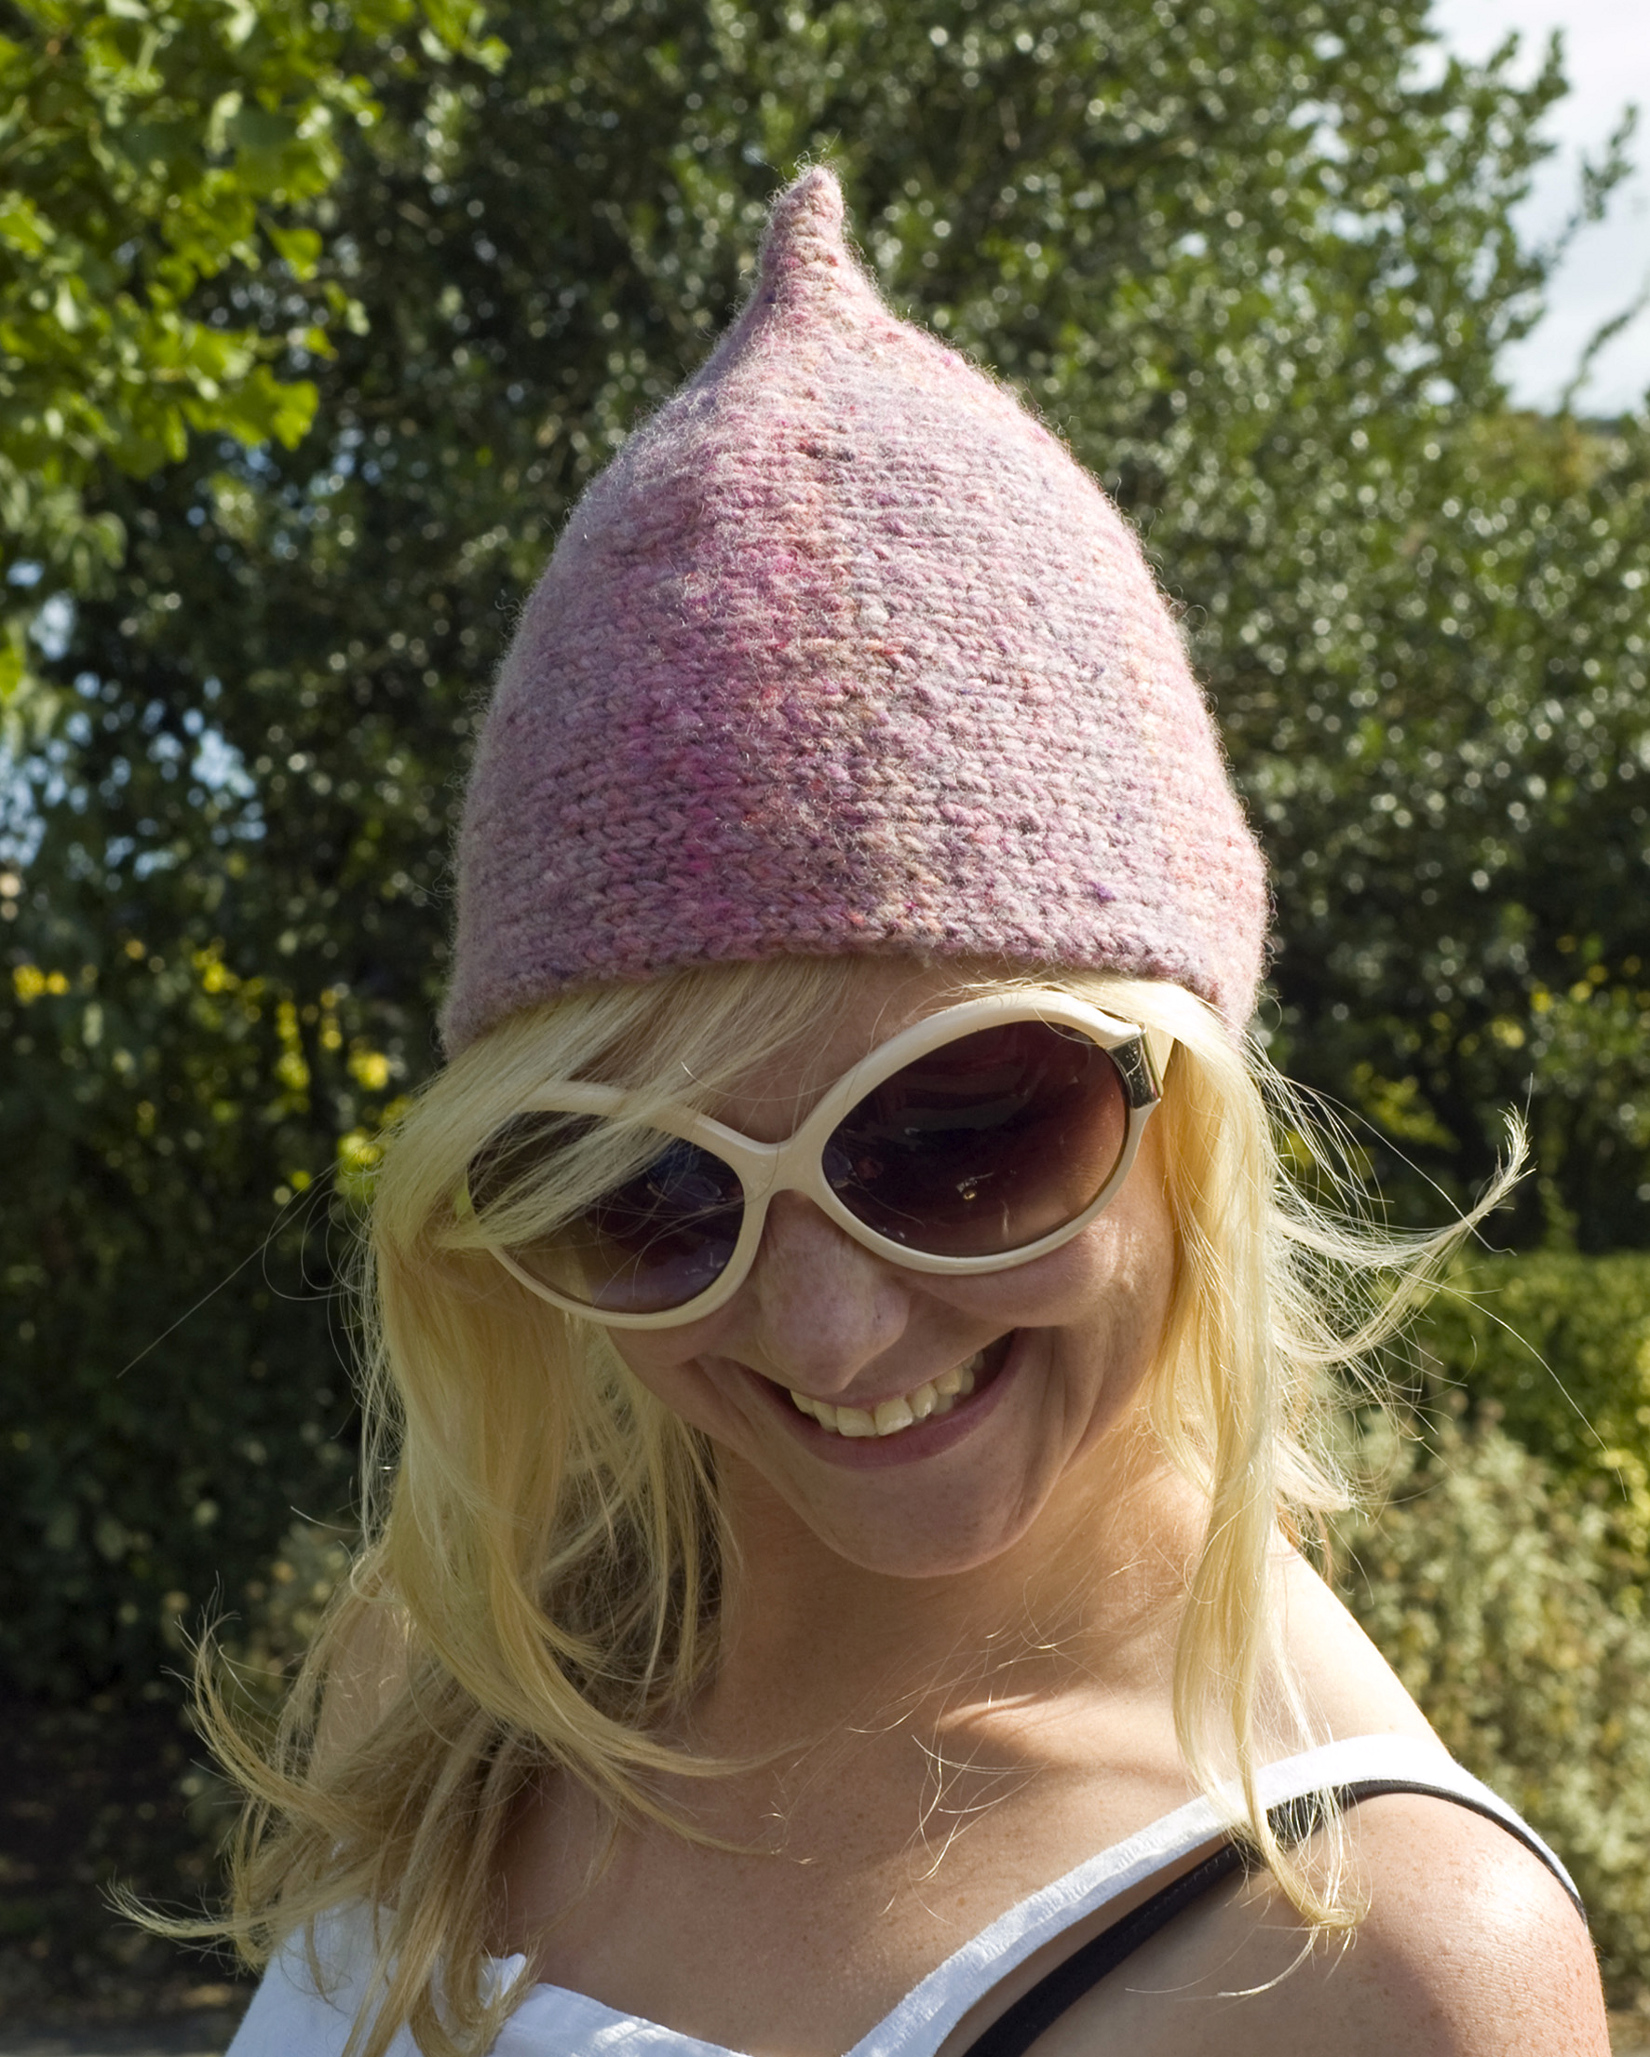 Pickelhaube sideways knit pixie Hat pattern